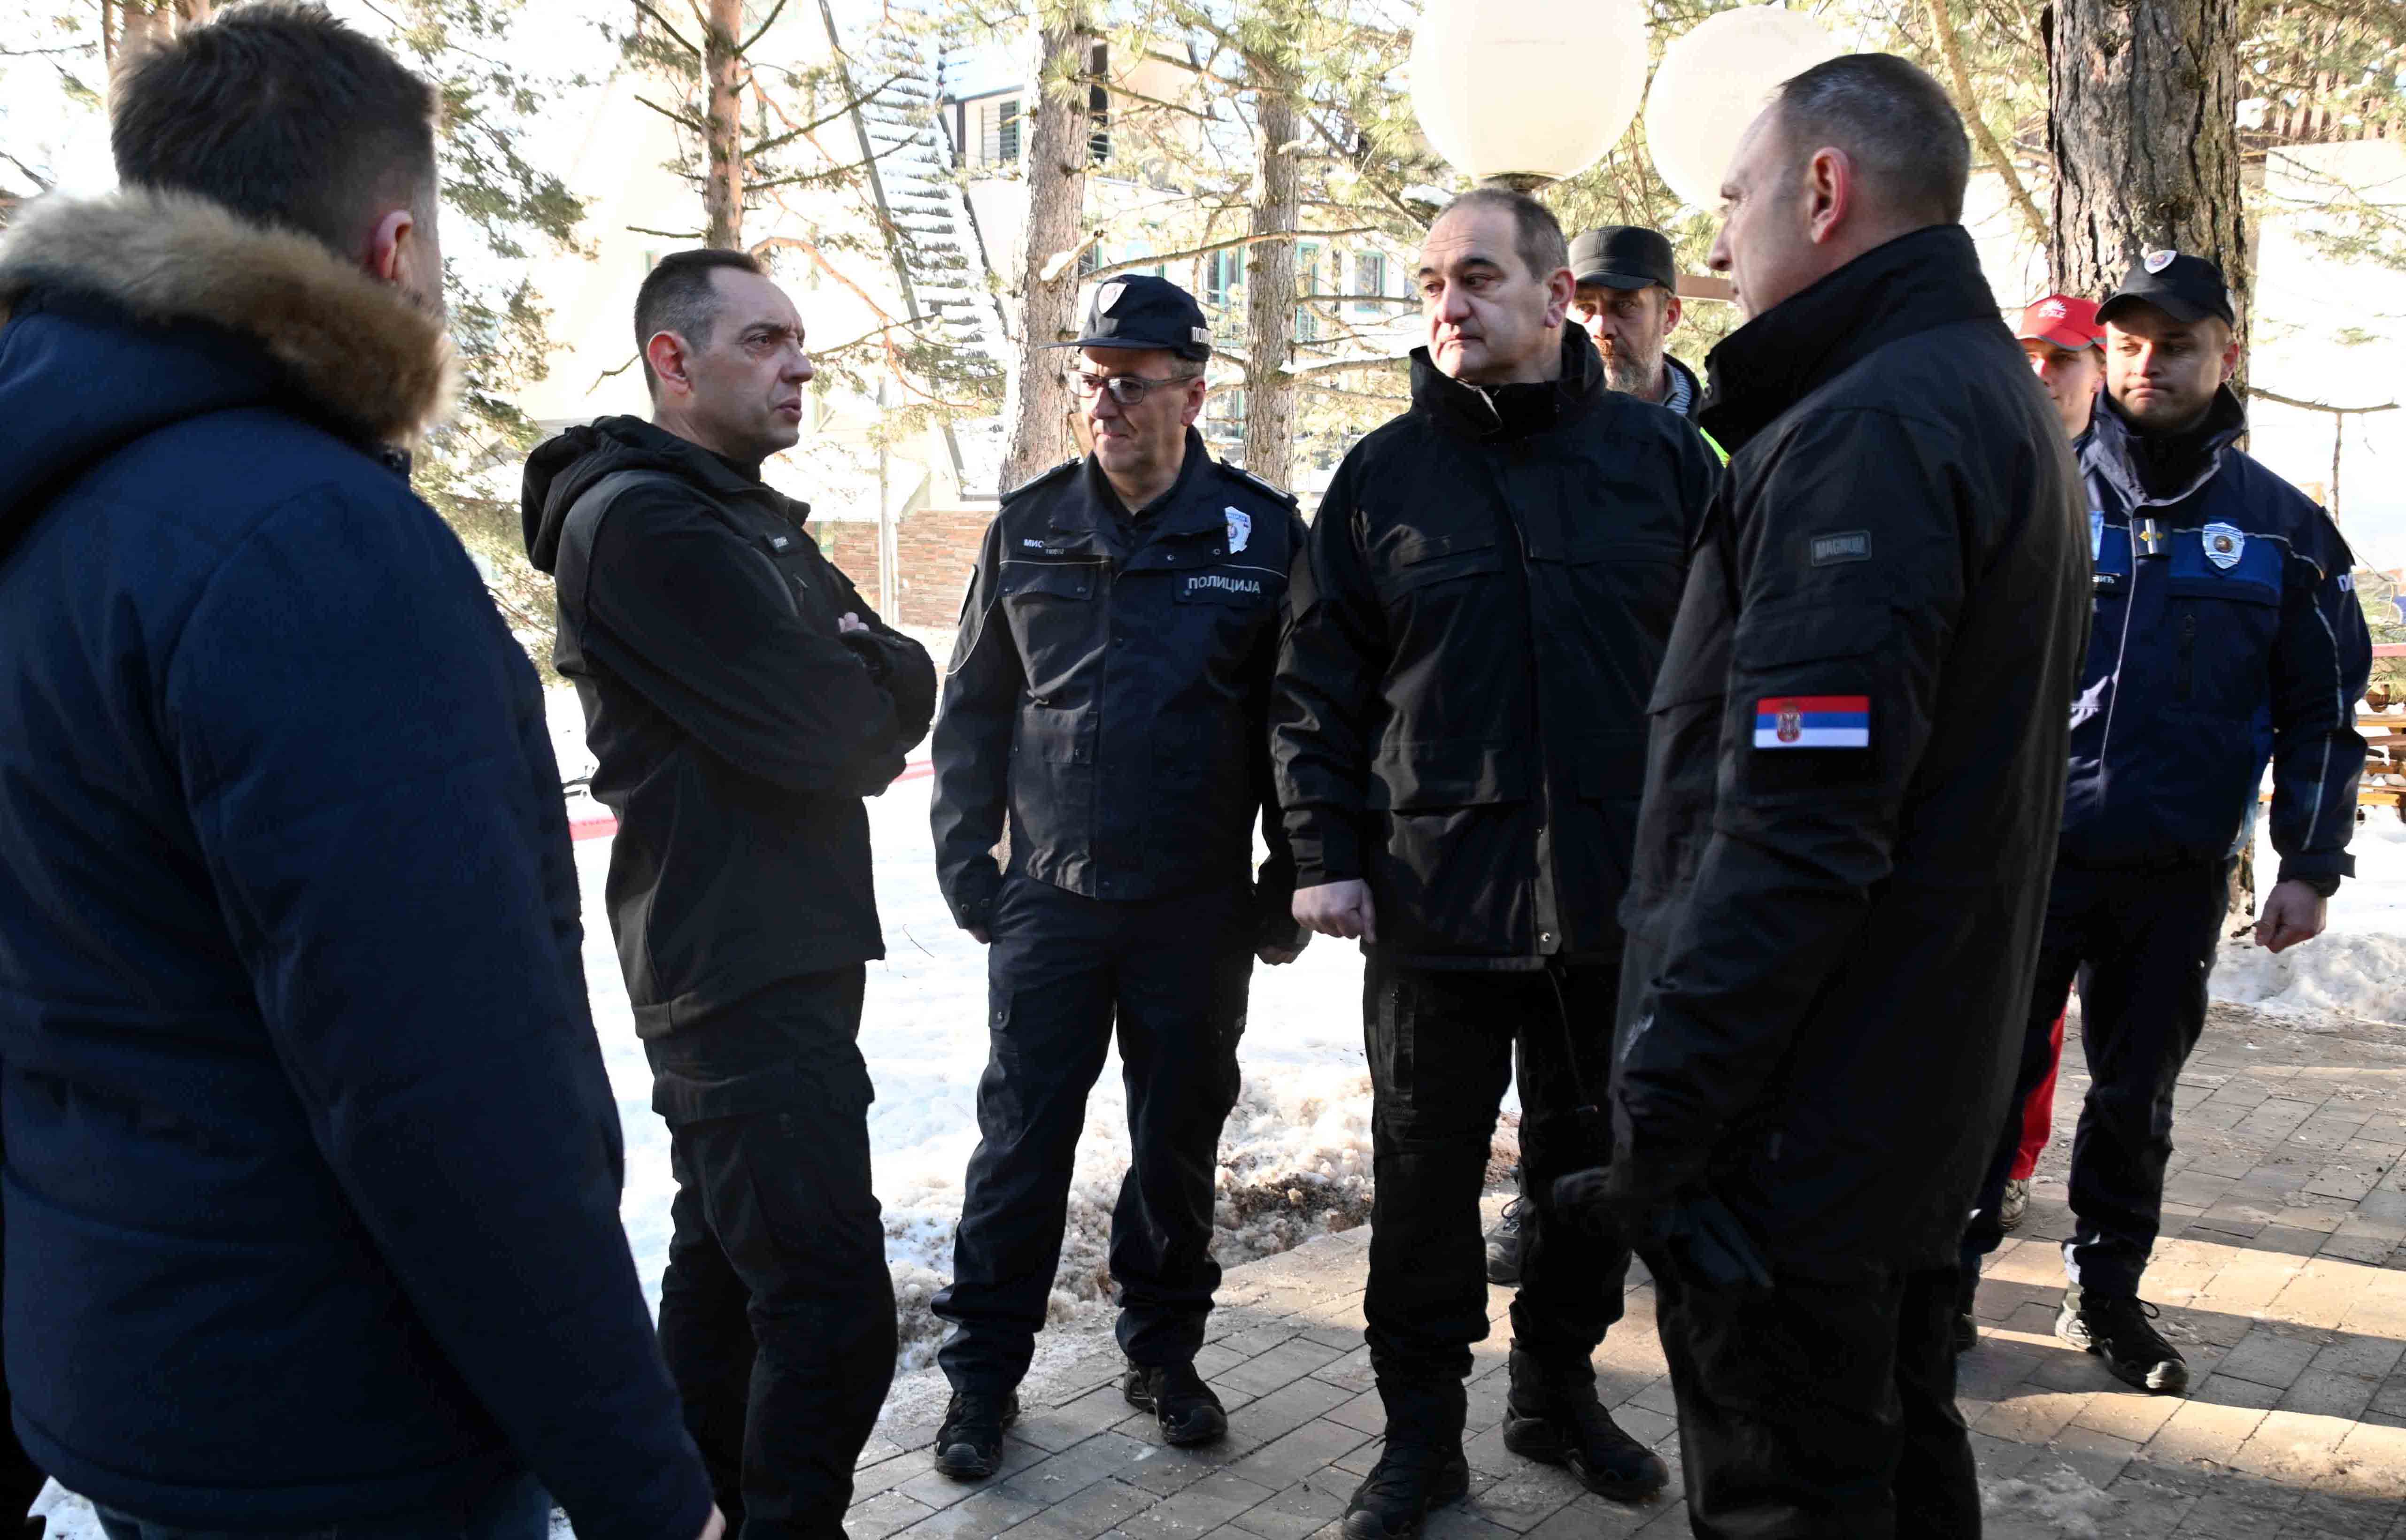 Ministar Vulin obišao radove na izgradnji Policijske ispostave Zlatibor: Jačanjem kapaciteta MUP-a podižemo bezbednost građana